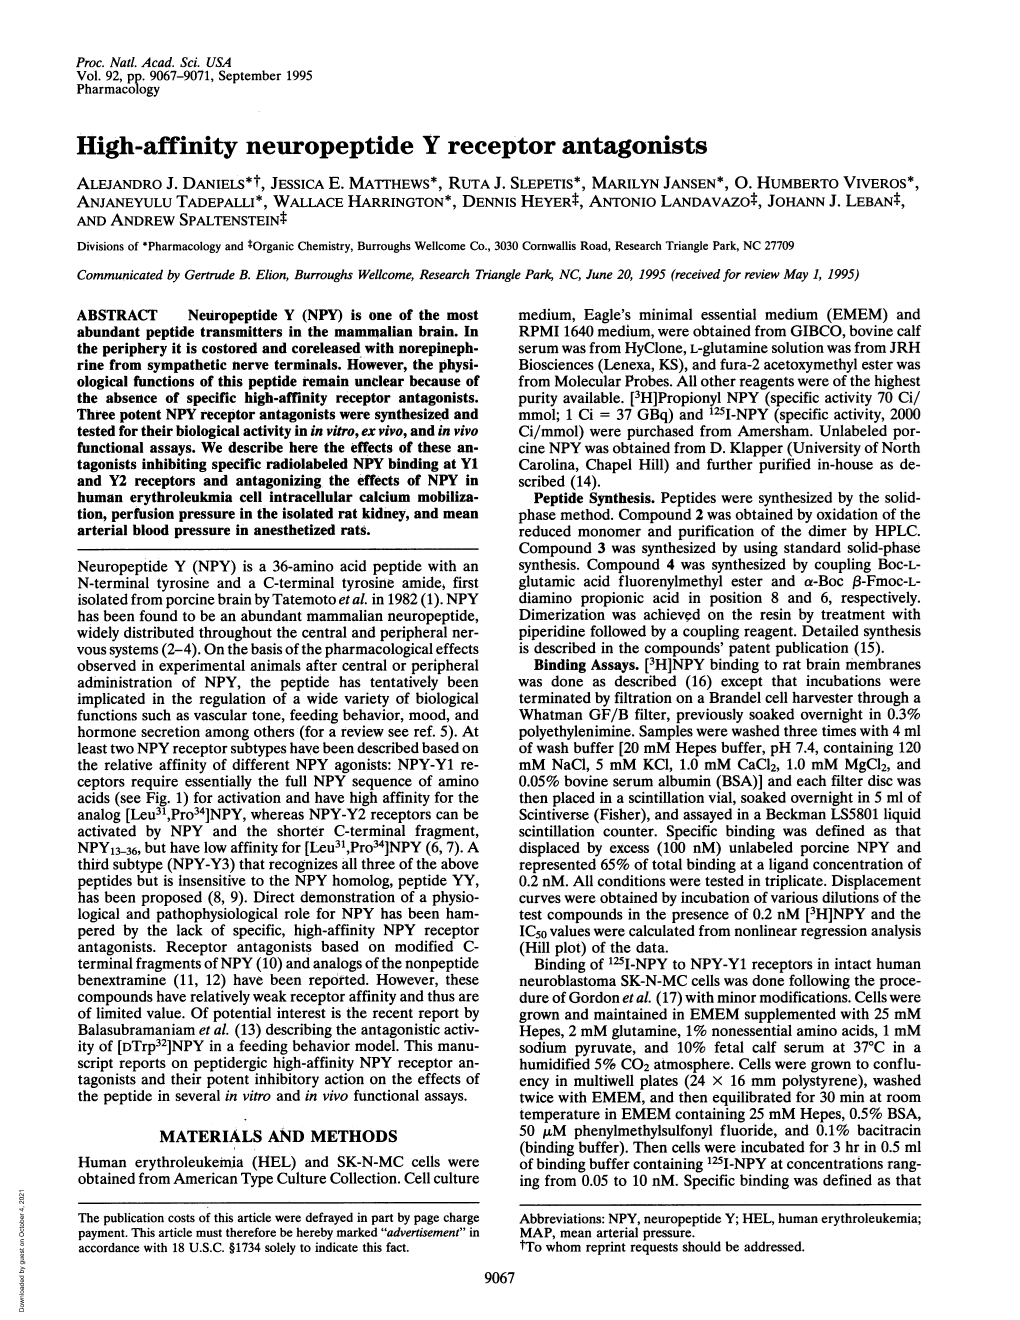 High-Affinity Neuropeptide Y Receptor Antagonists ALEJANDRO J